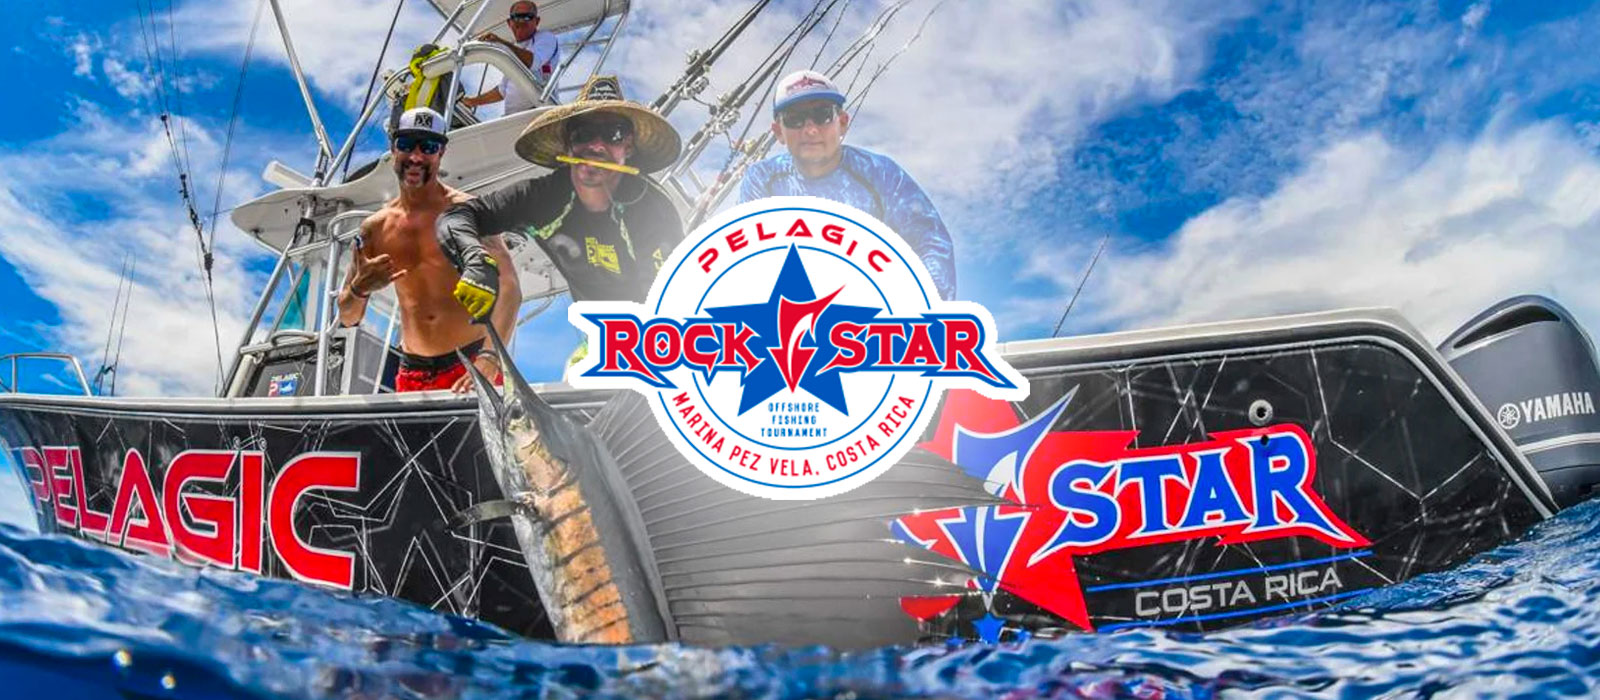 Pelagic Rock Star Offshore Tourmanet